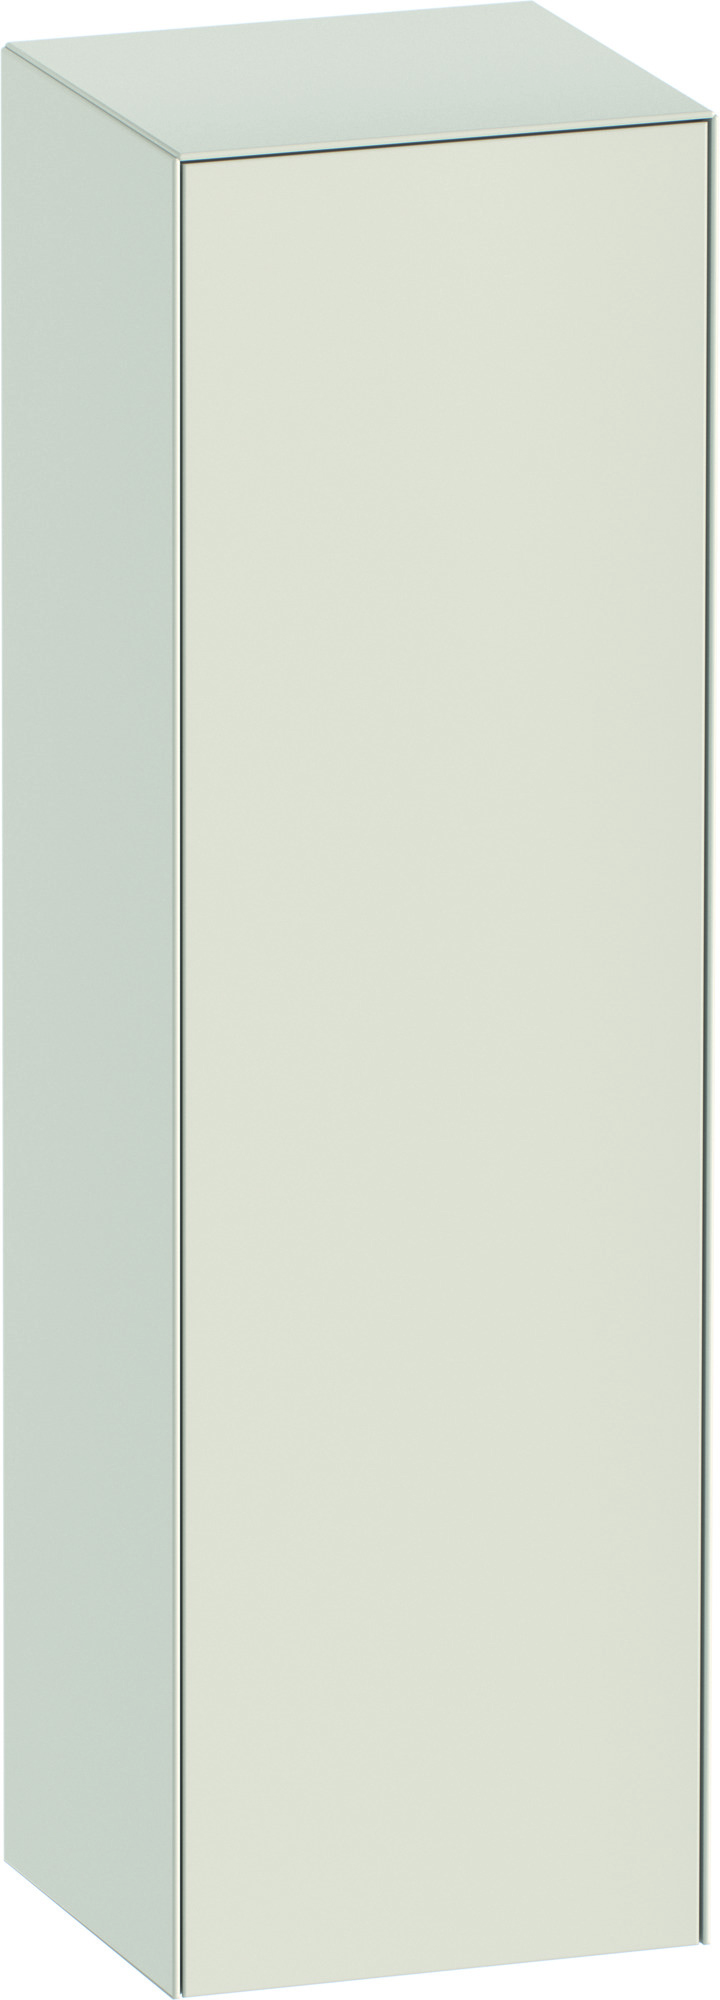 Шкаф Duravit White Tulip WT1332L3939 скандинавский белый шелковисто-матовый